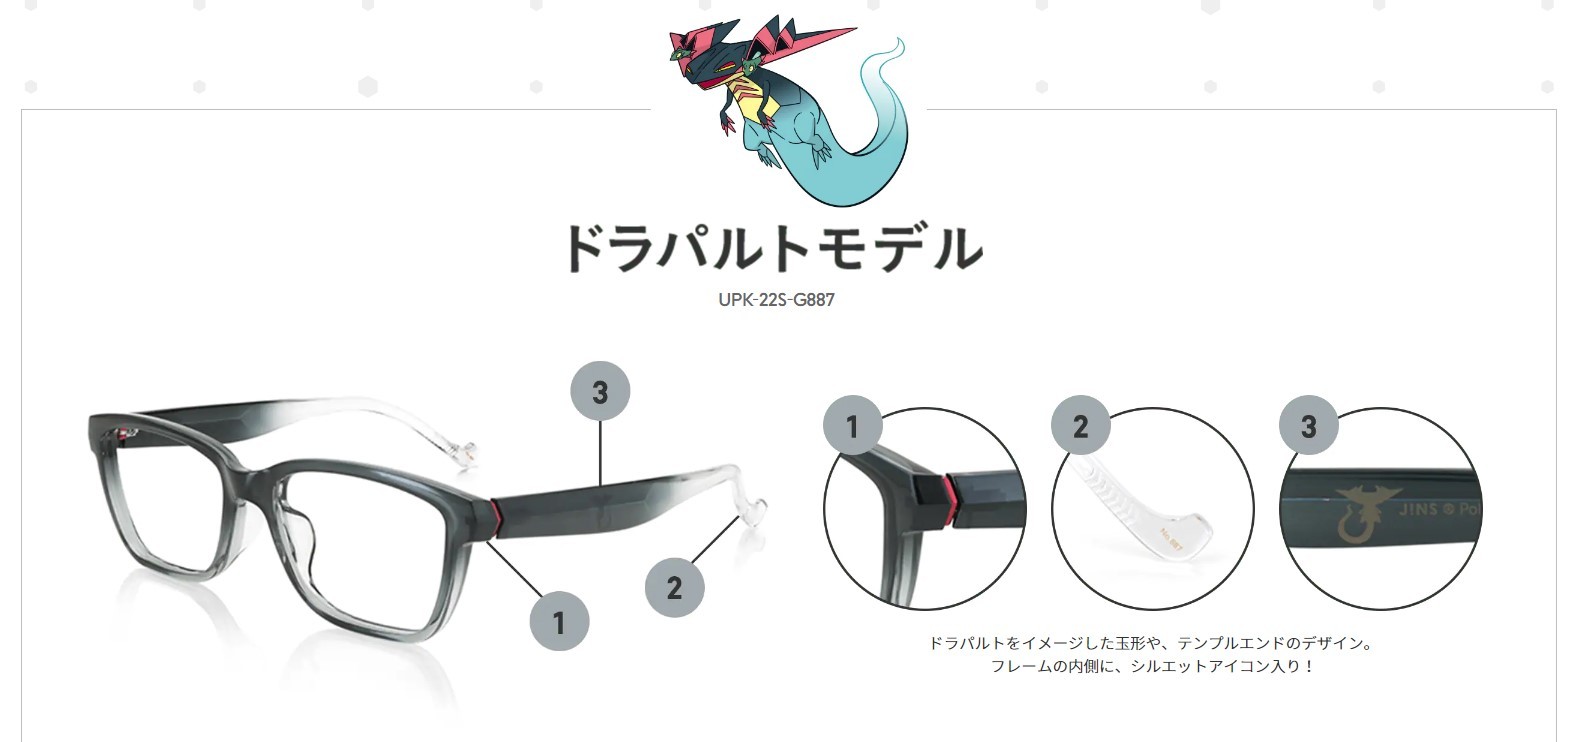 Jins Pokemon Glasses Make Prescription Lenses Fun Again